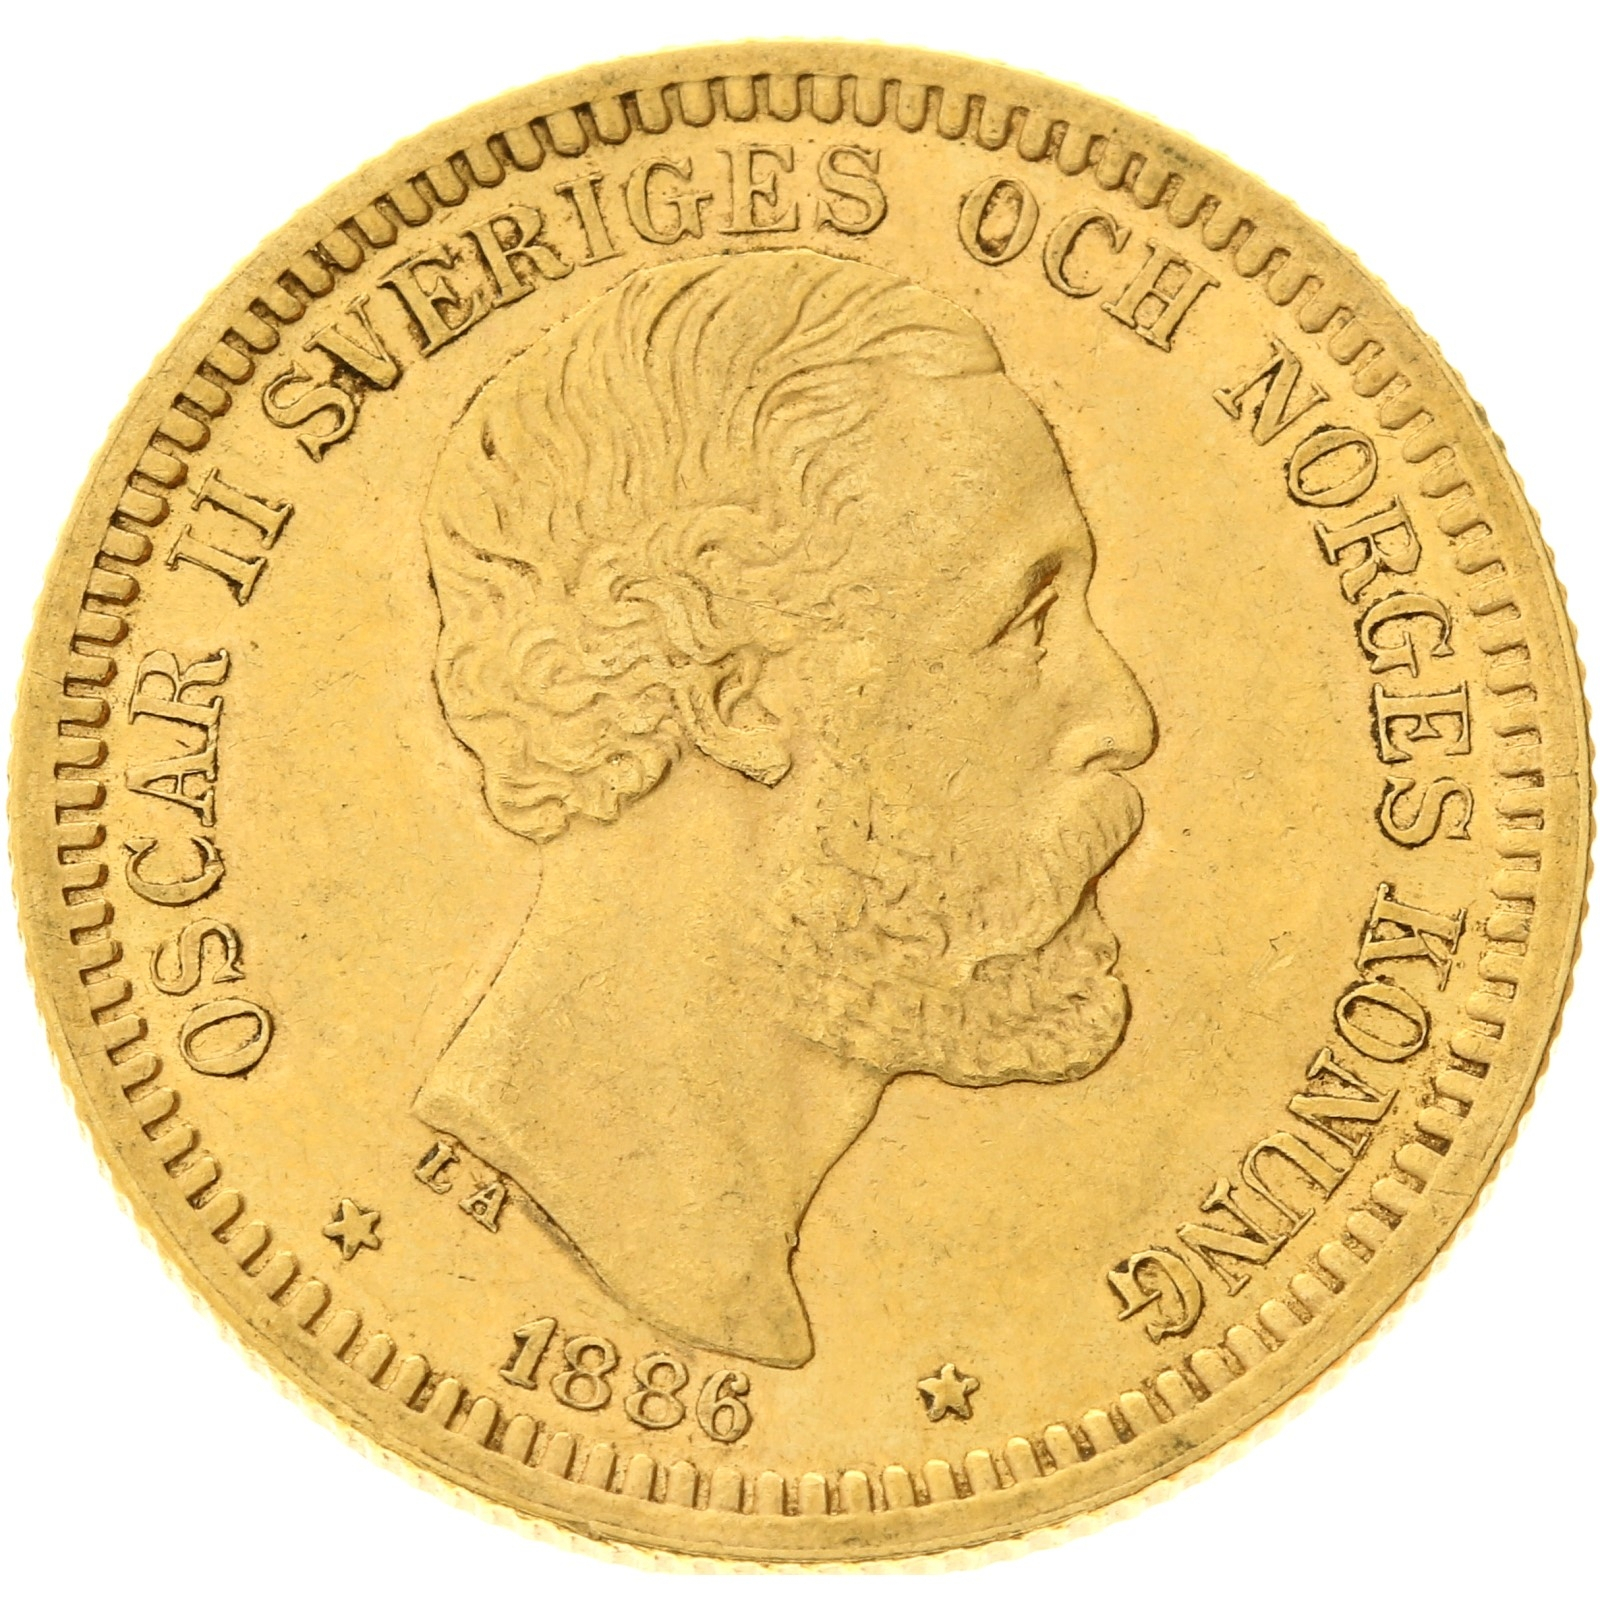 Sweden - 20 kronor - 1886 - Oscar II